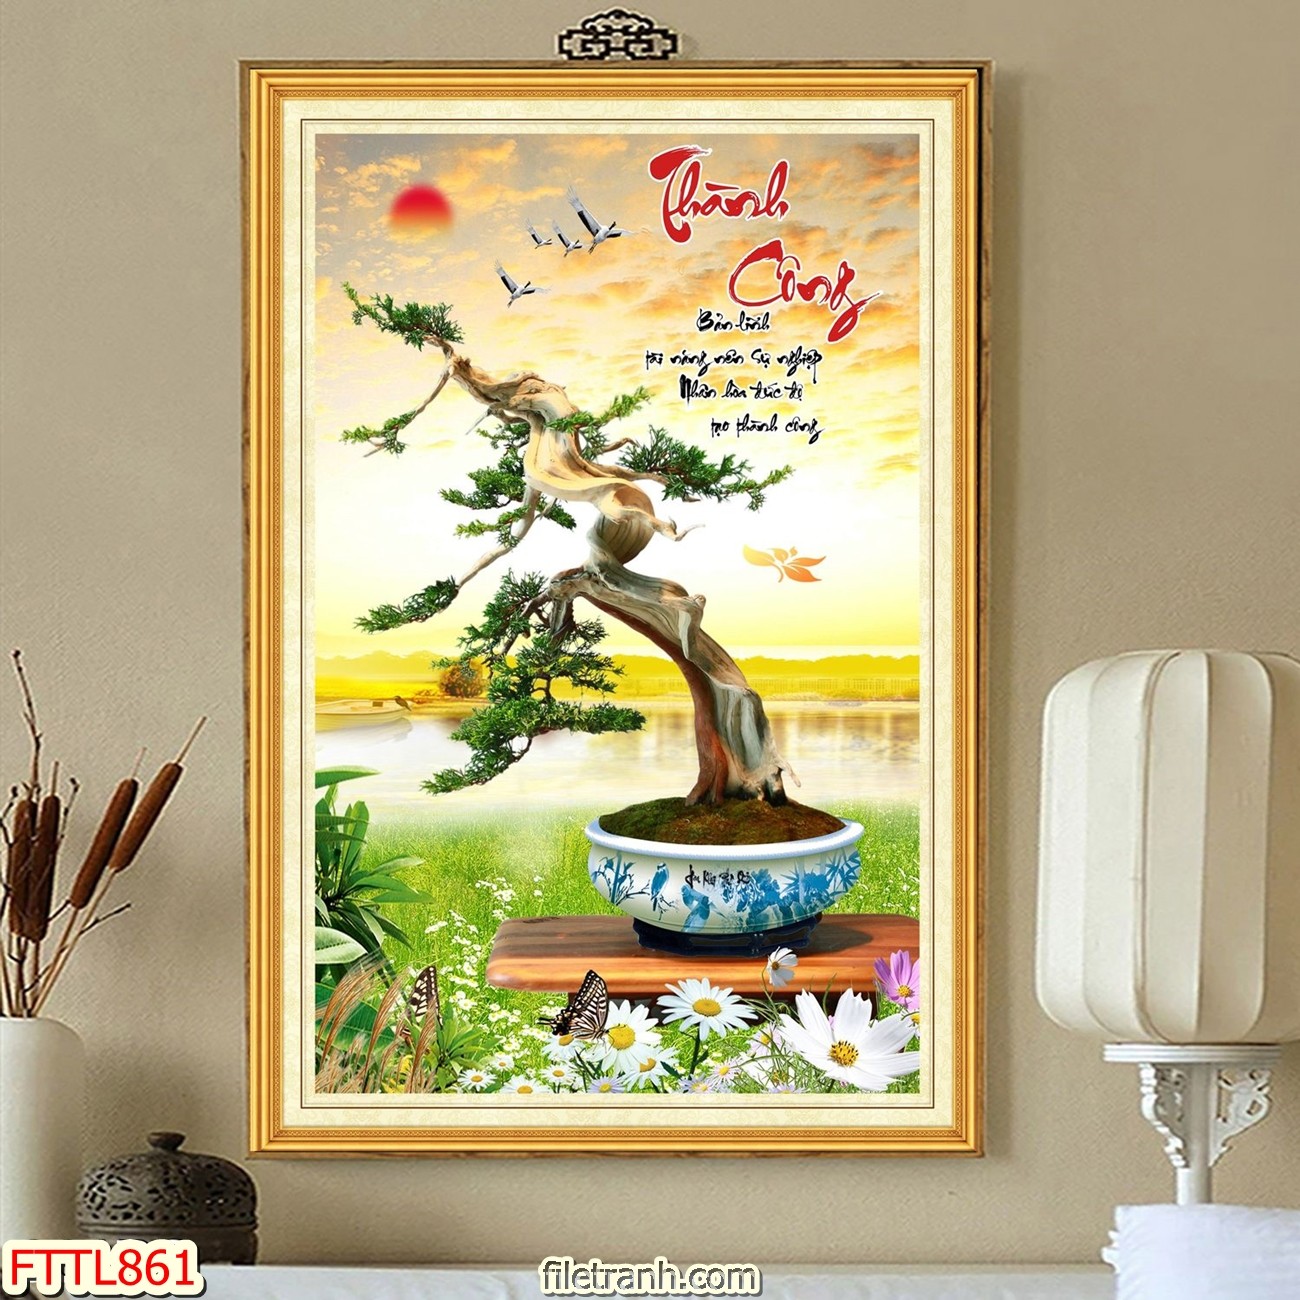 https://filetranh.com/file-tranh-chau-mai-bonsai/file-tranh-chau-mai-bonsai-fttl861.html